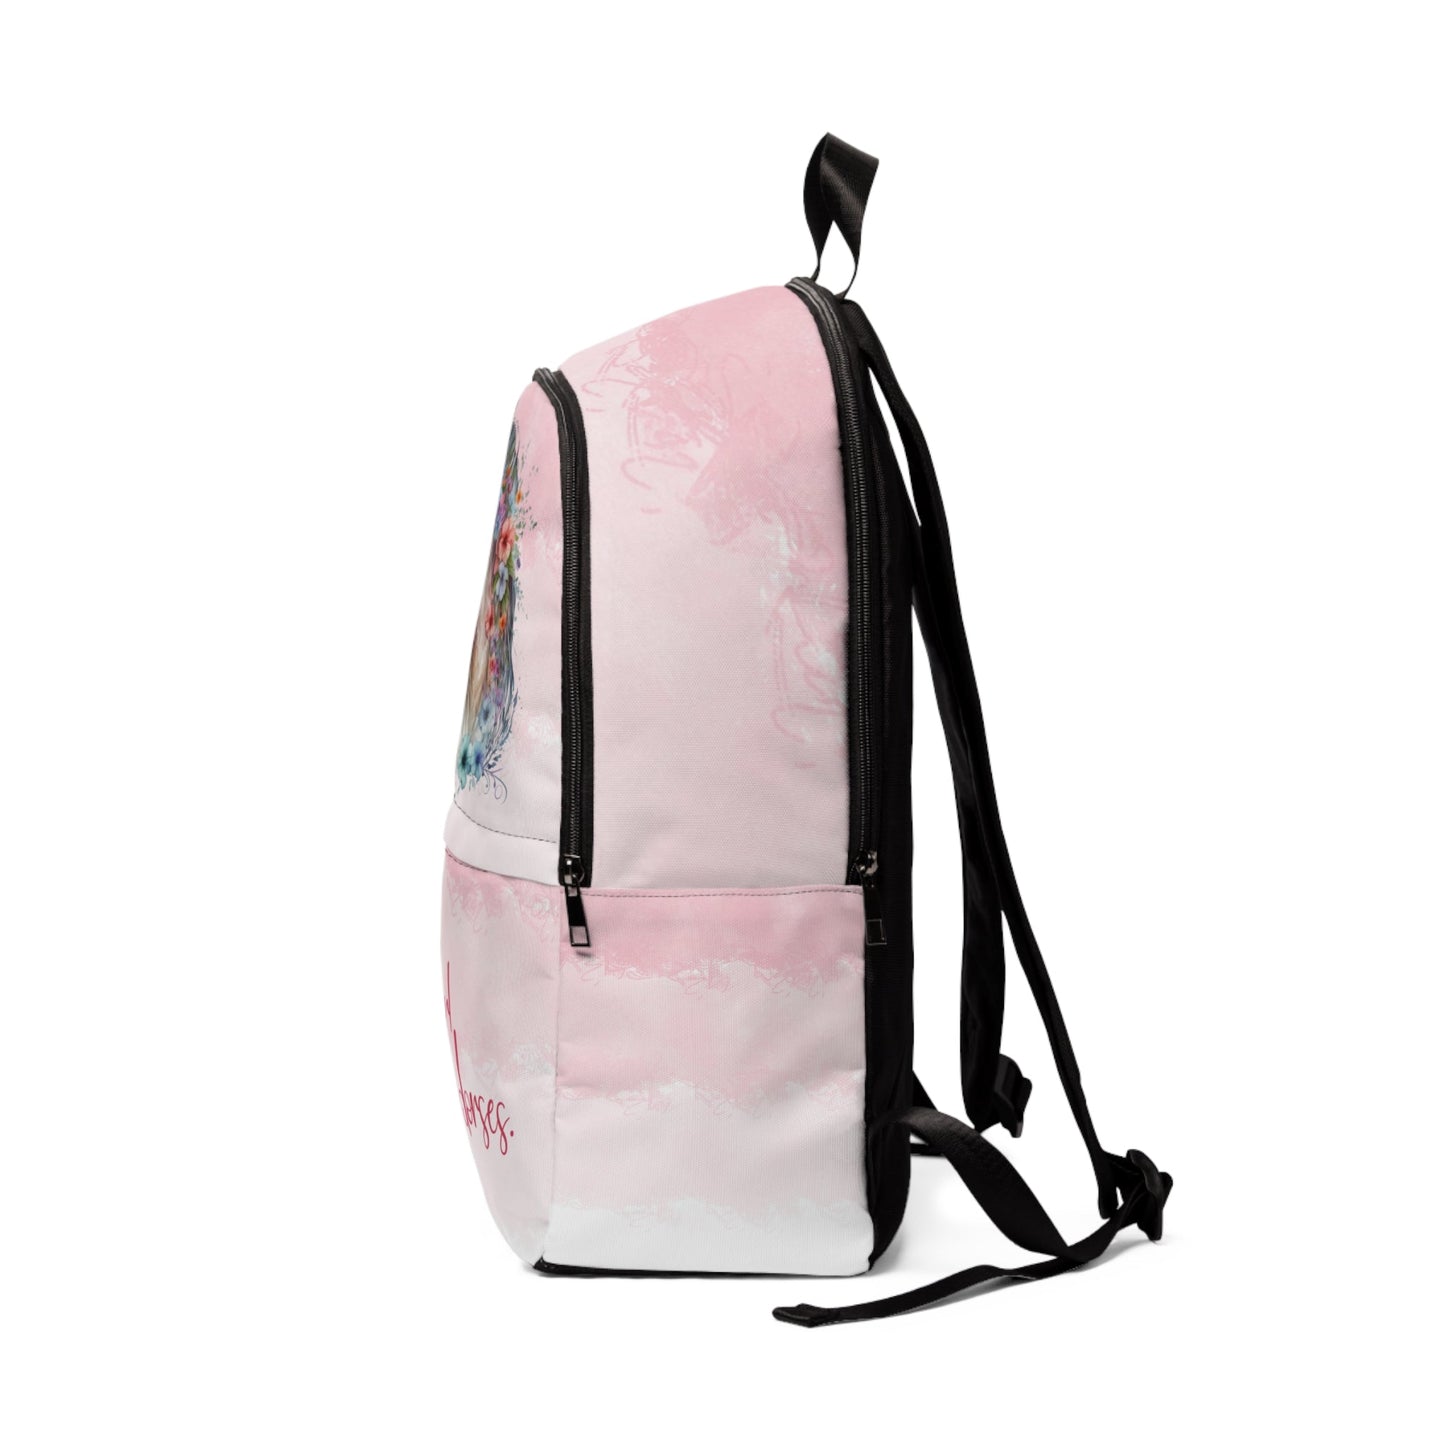 Personalized Fantasy Horse Backpack, Fashionable Girls Bookbag, School Pack - FlooredByArt